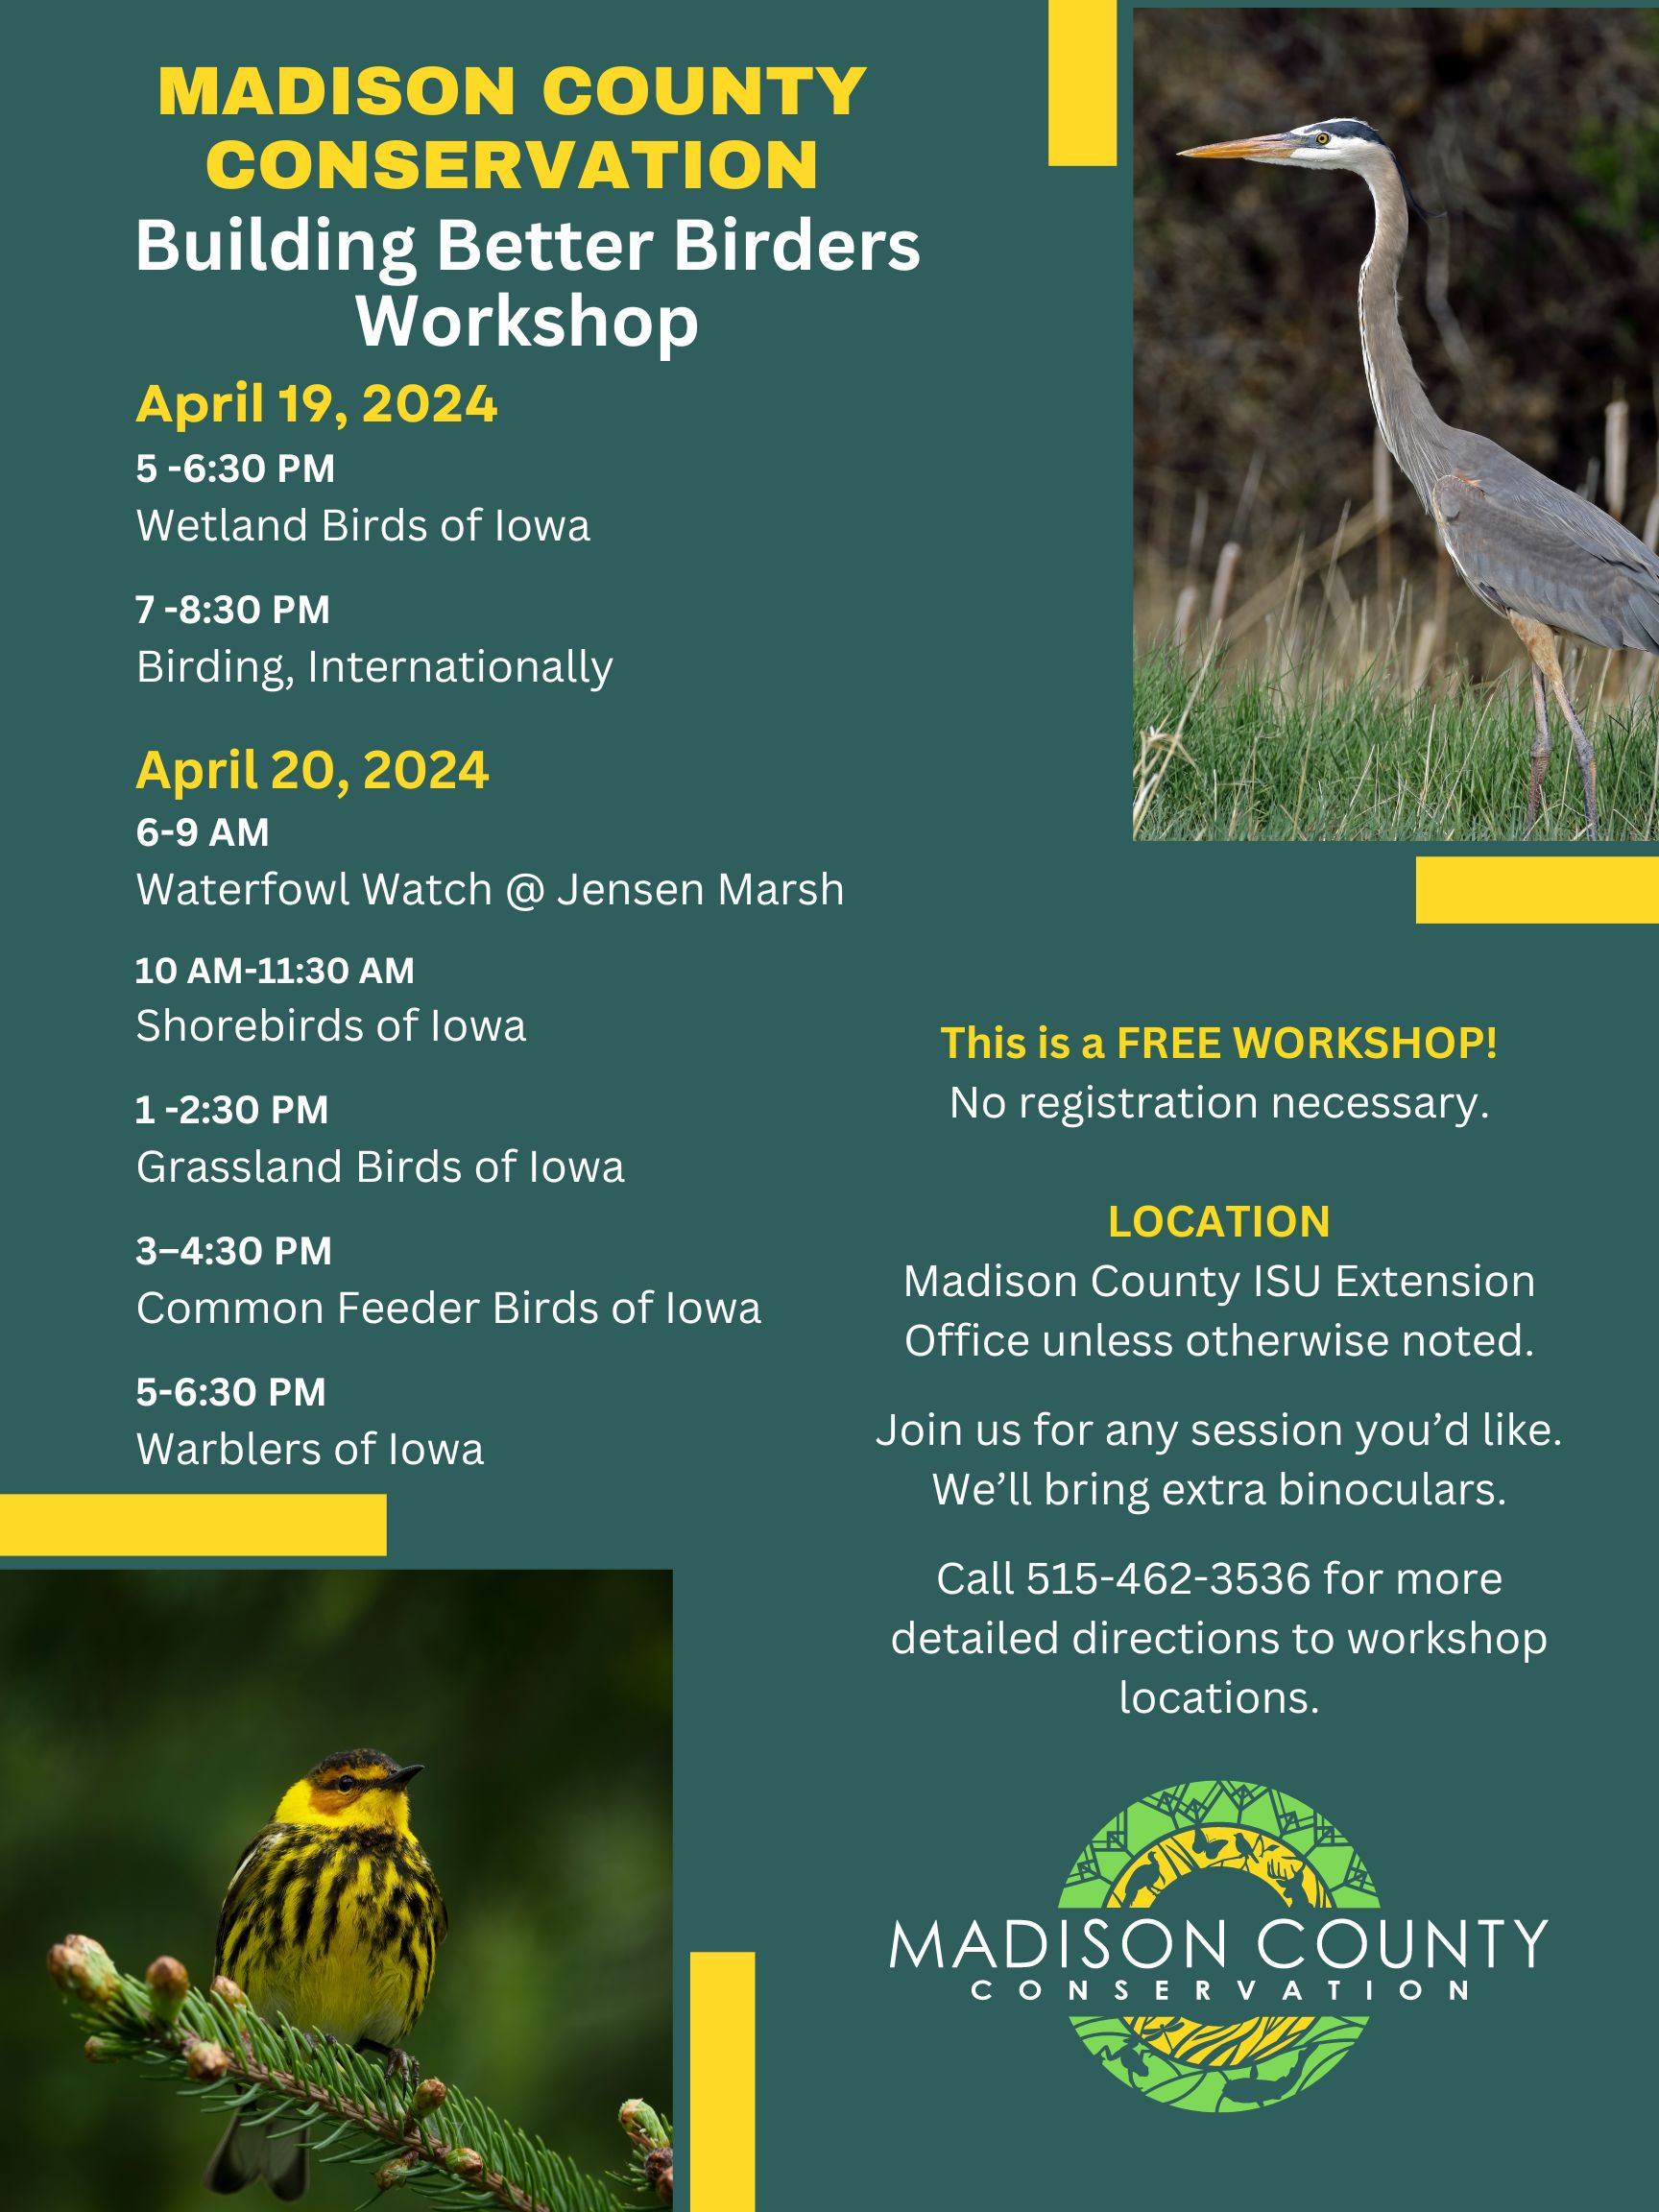 Event Flyer: Building Better Birders Workshop
April 19-20, 2024